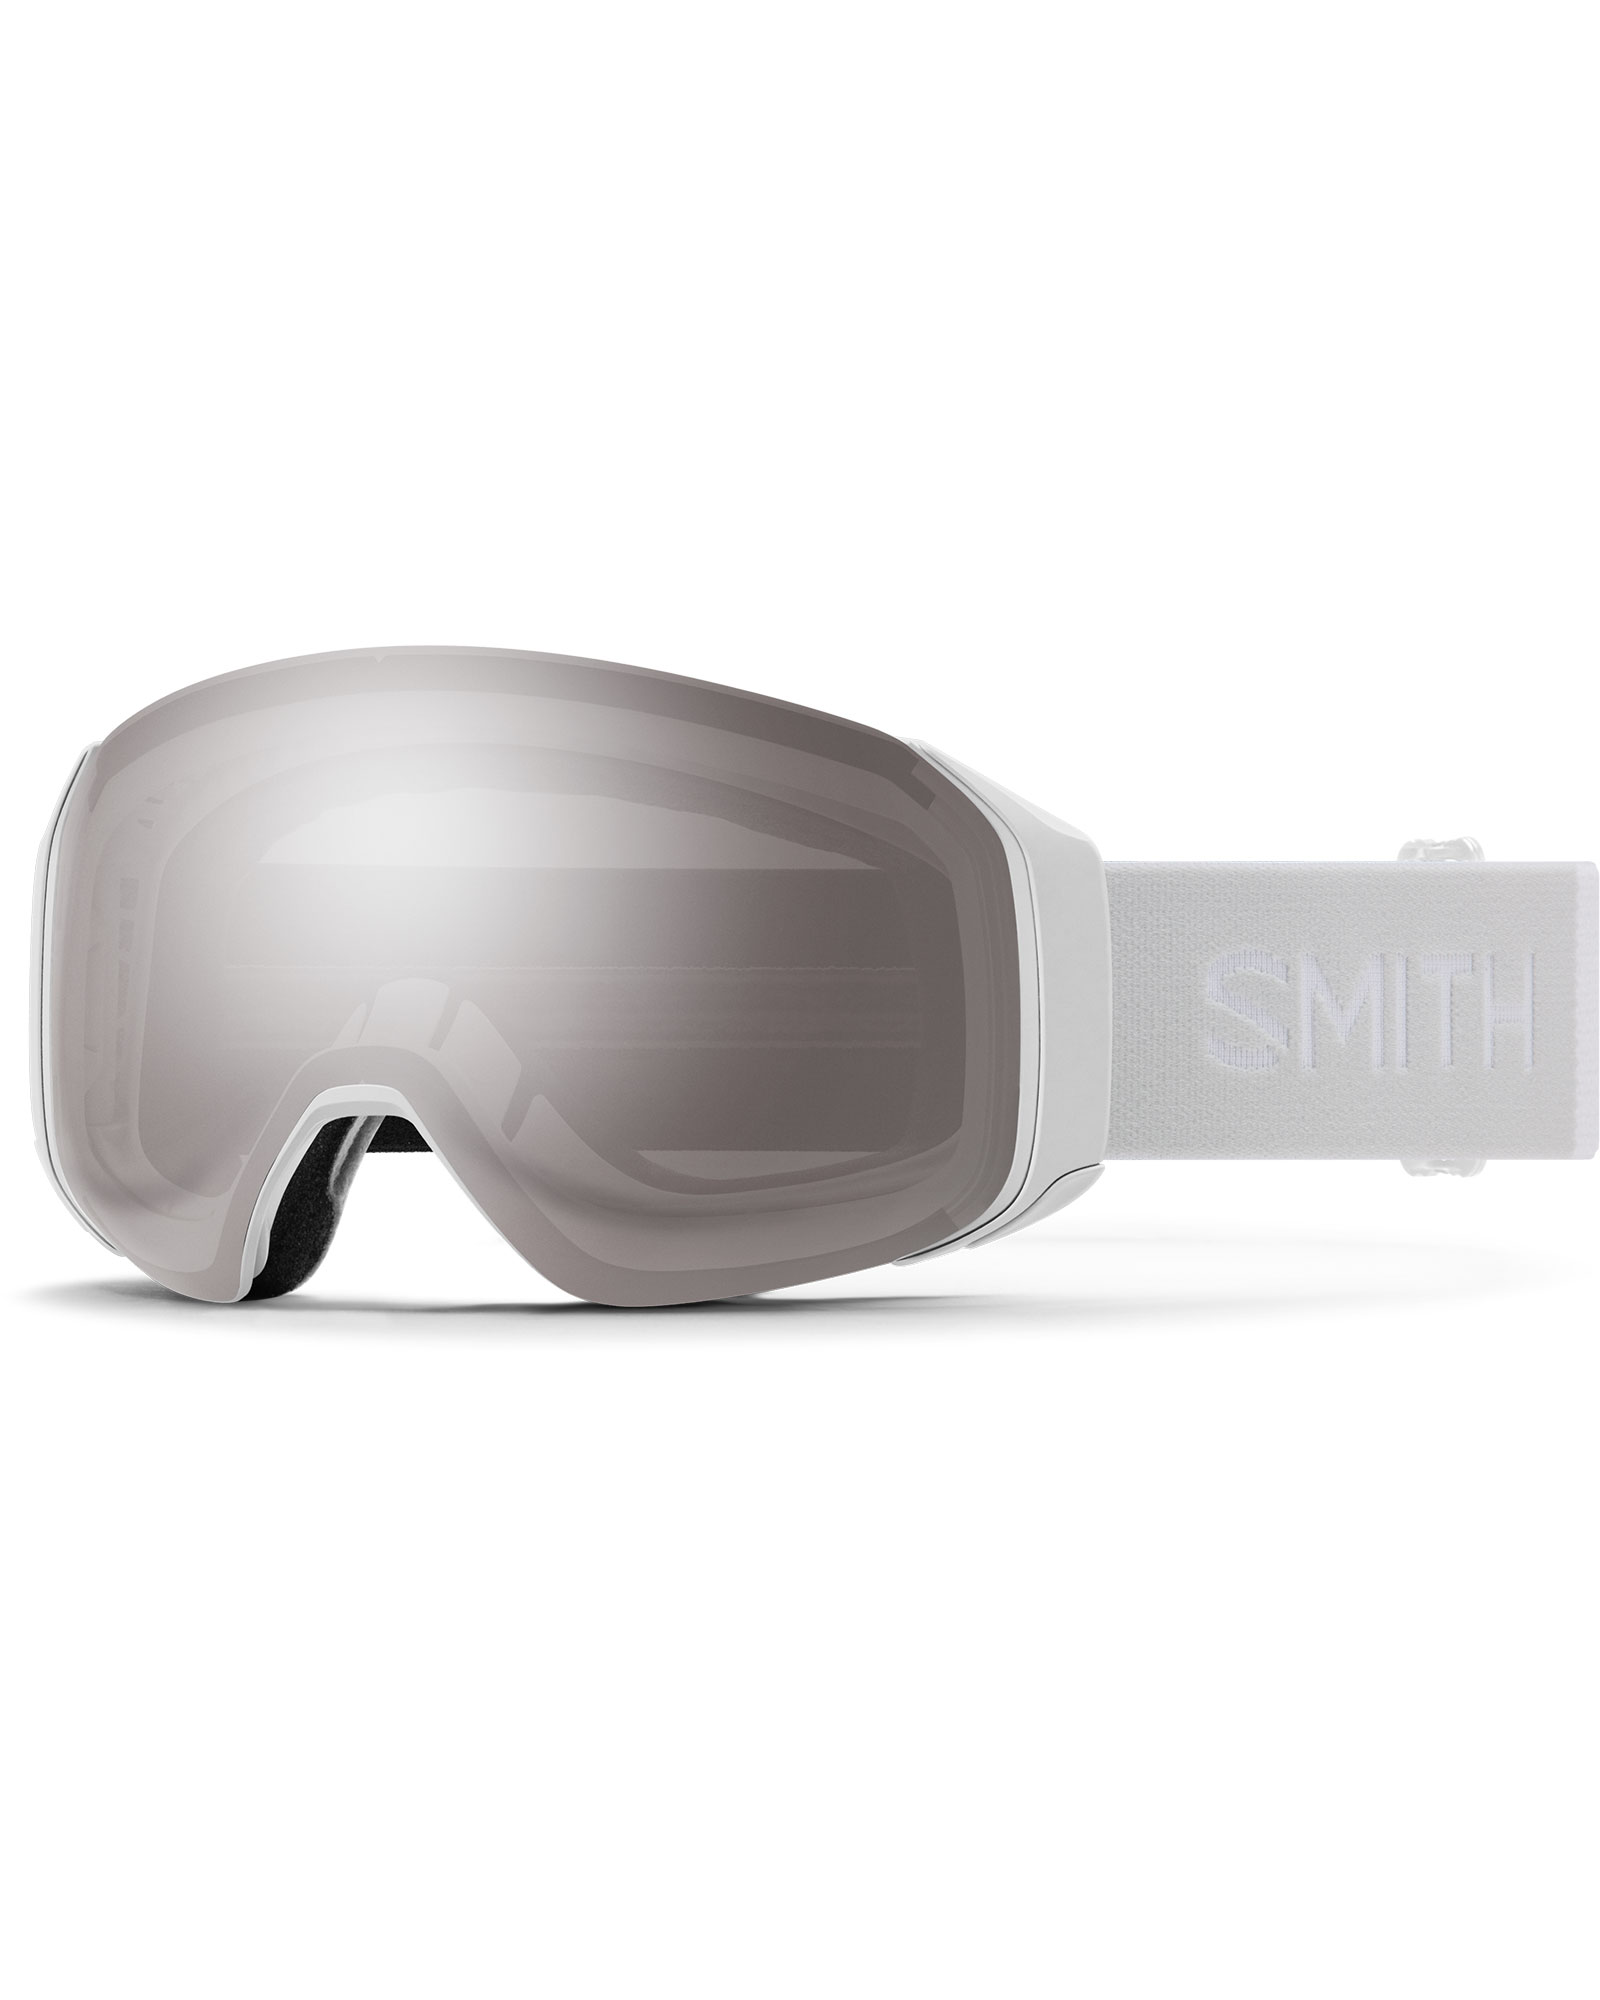 Smith 4D MAG S White Vapor / ChromaPop Sun Platinum Mirror + ChromaPop Storm Rose Flash Goggles - White Vapor